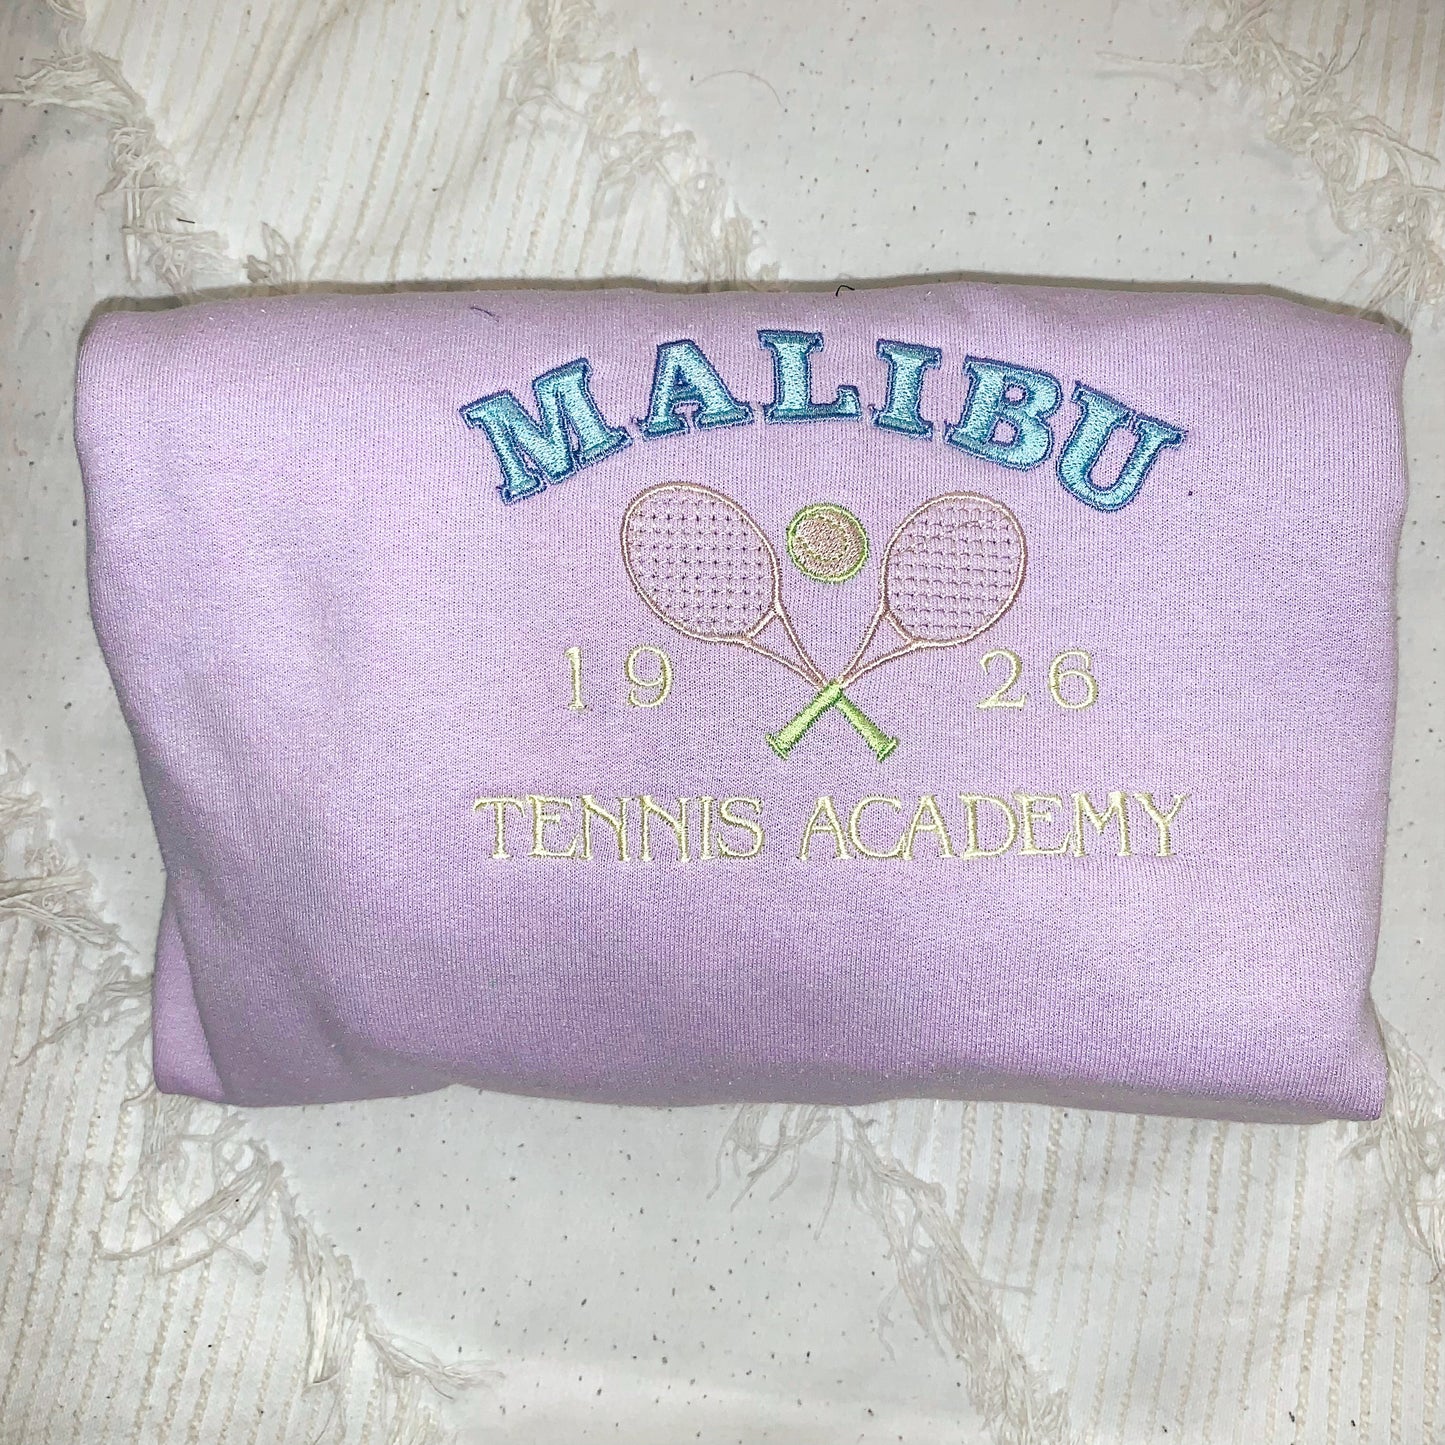 Malibu Tennis